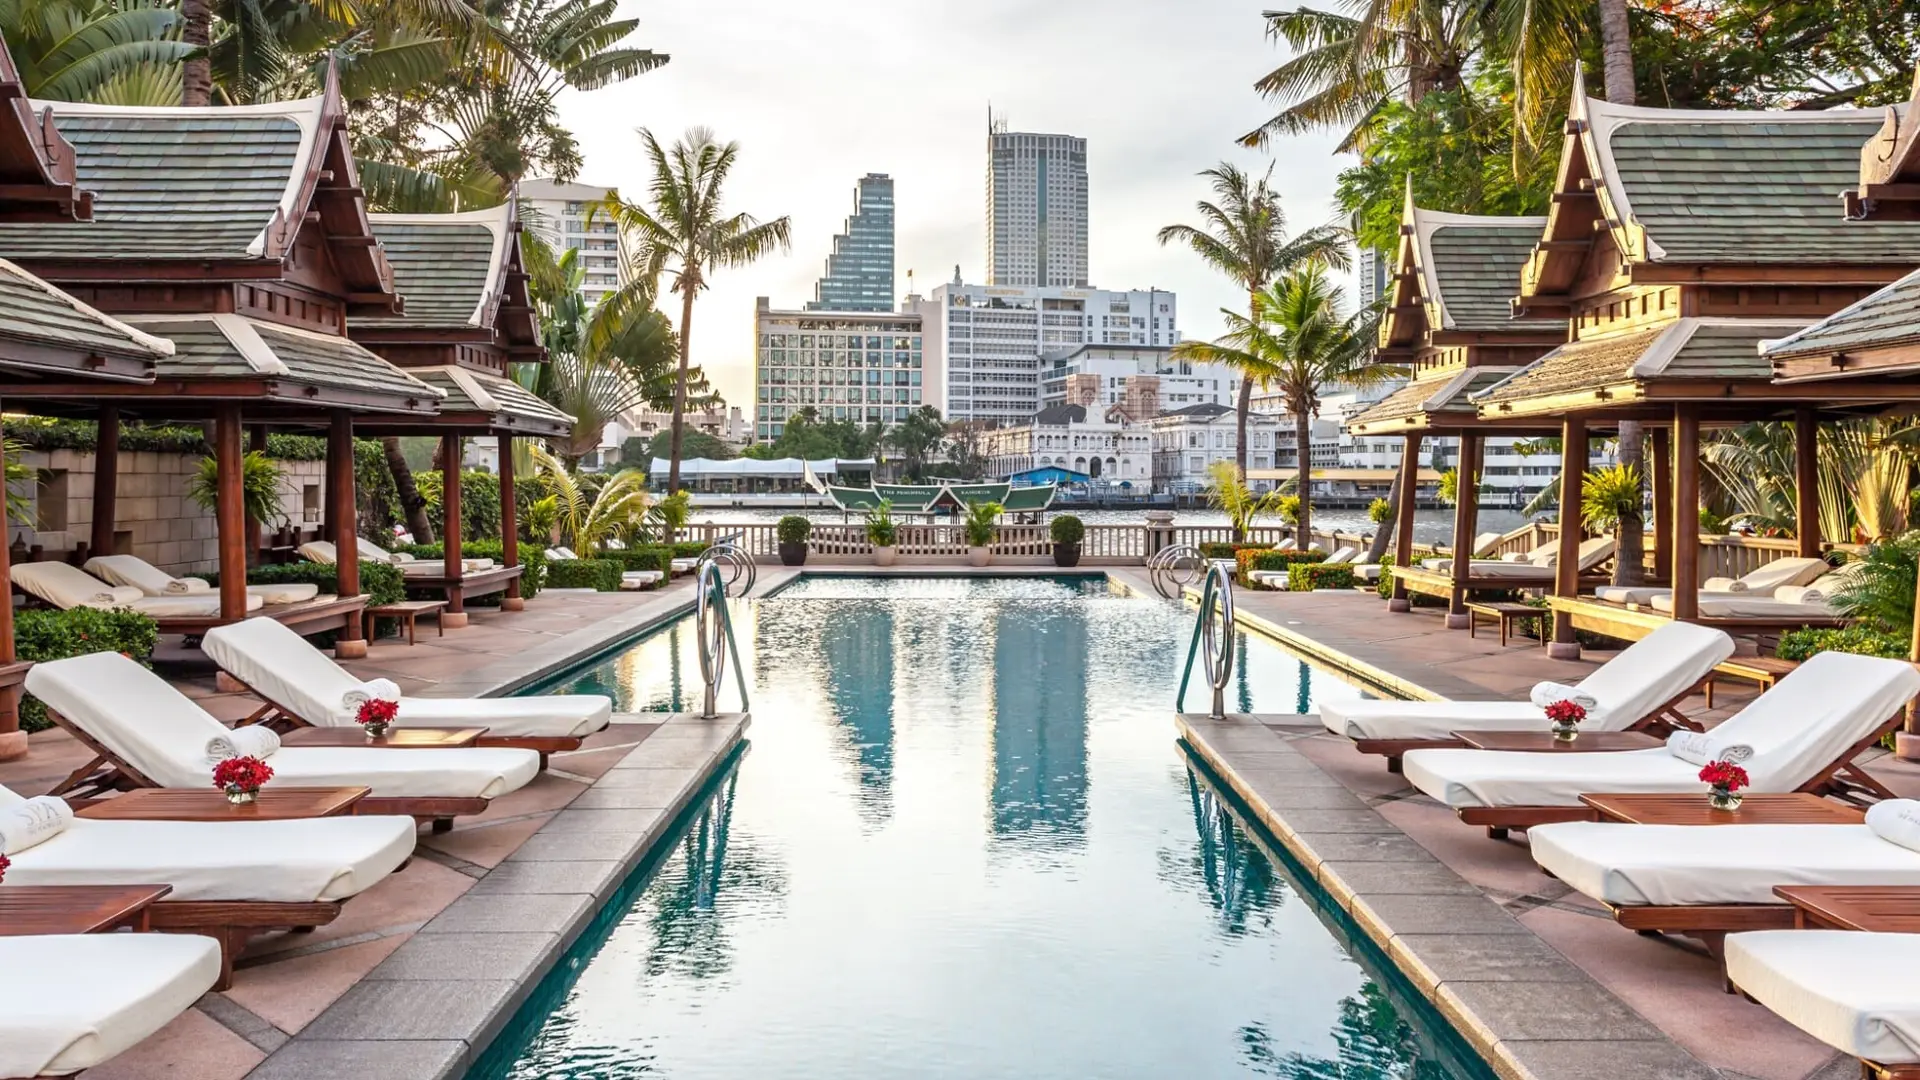 Hotel review Service & Facilities' - The Peninsula Bangkok - 0